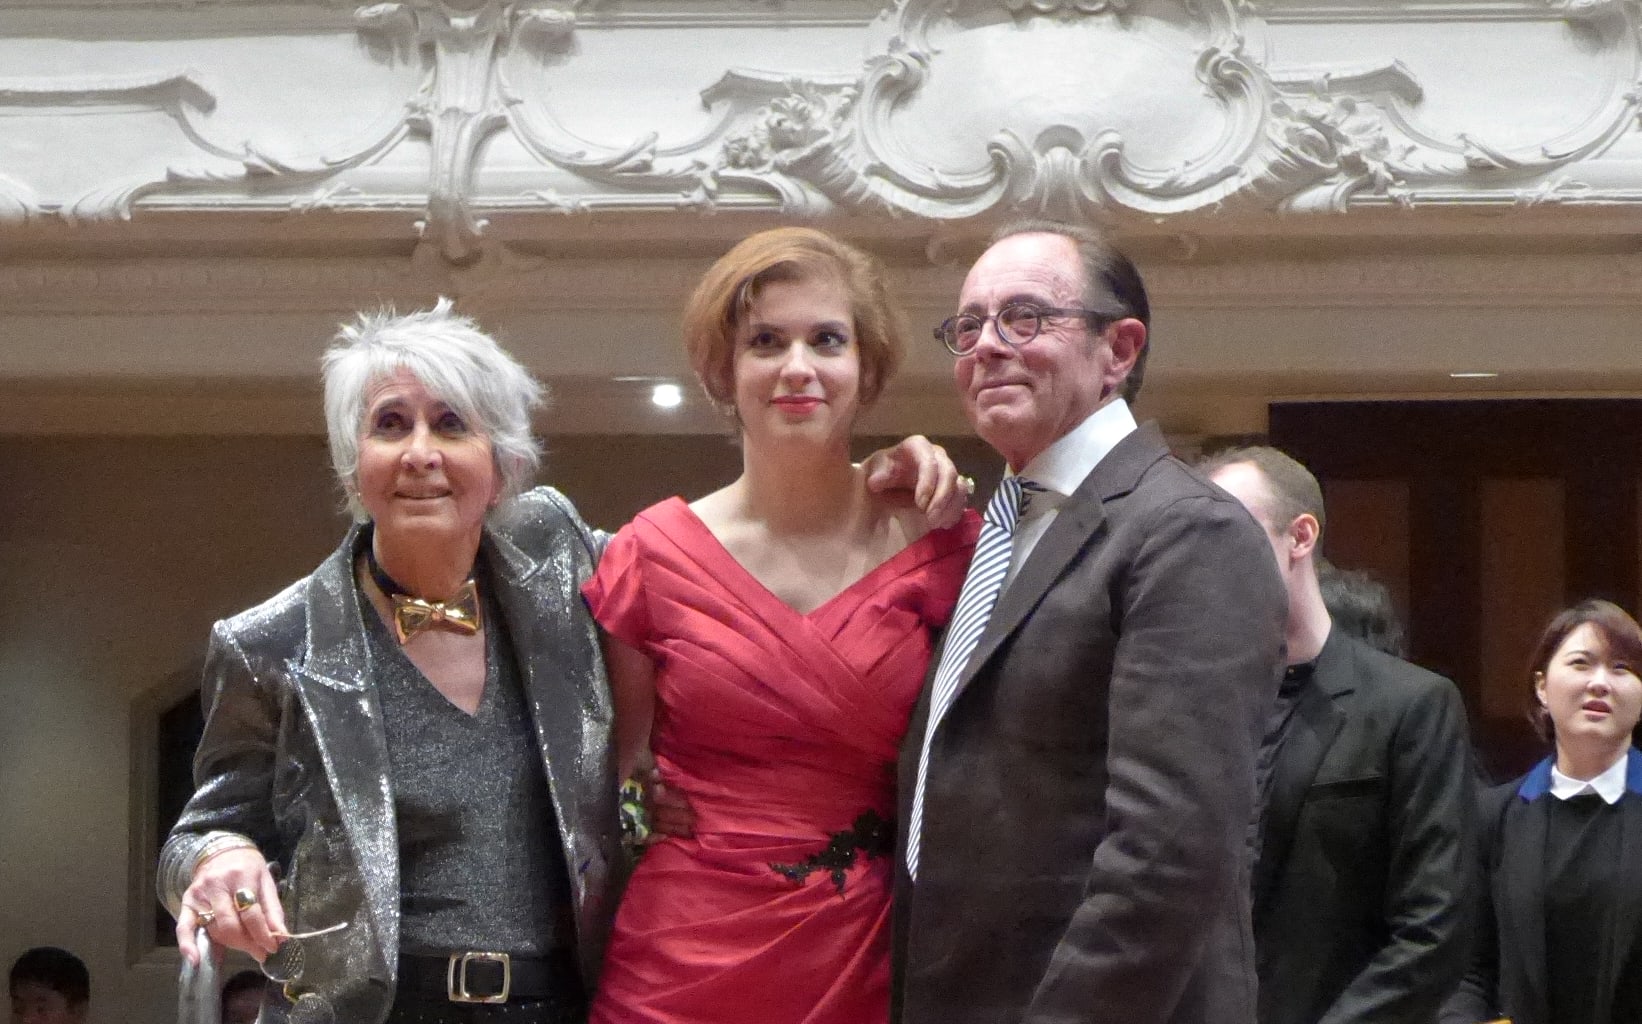 Christine, Lady Hill, winner Ioana Cristina Goicea and Sir Michael Hill